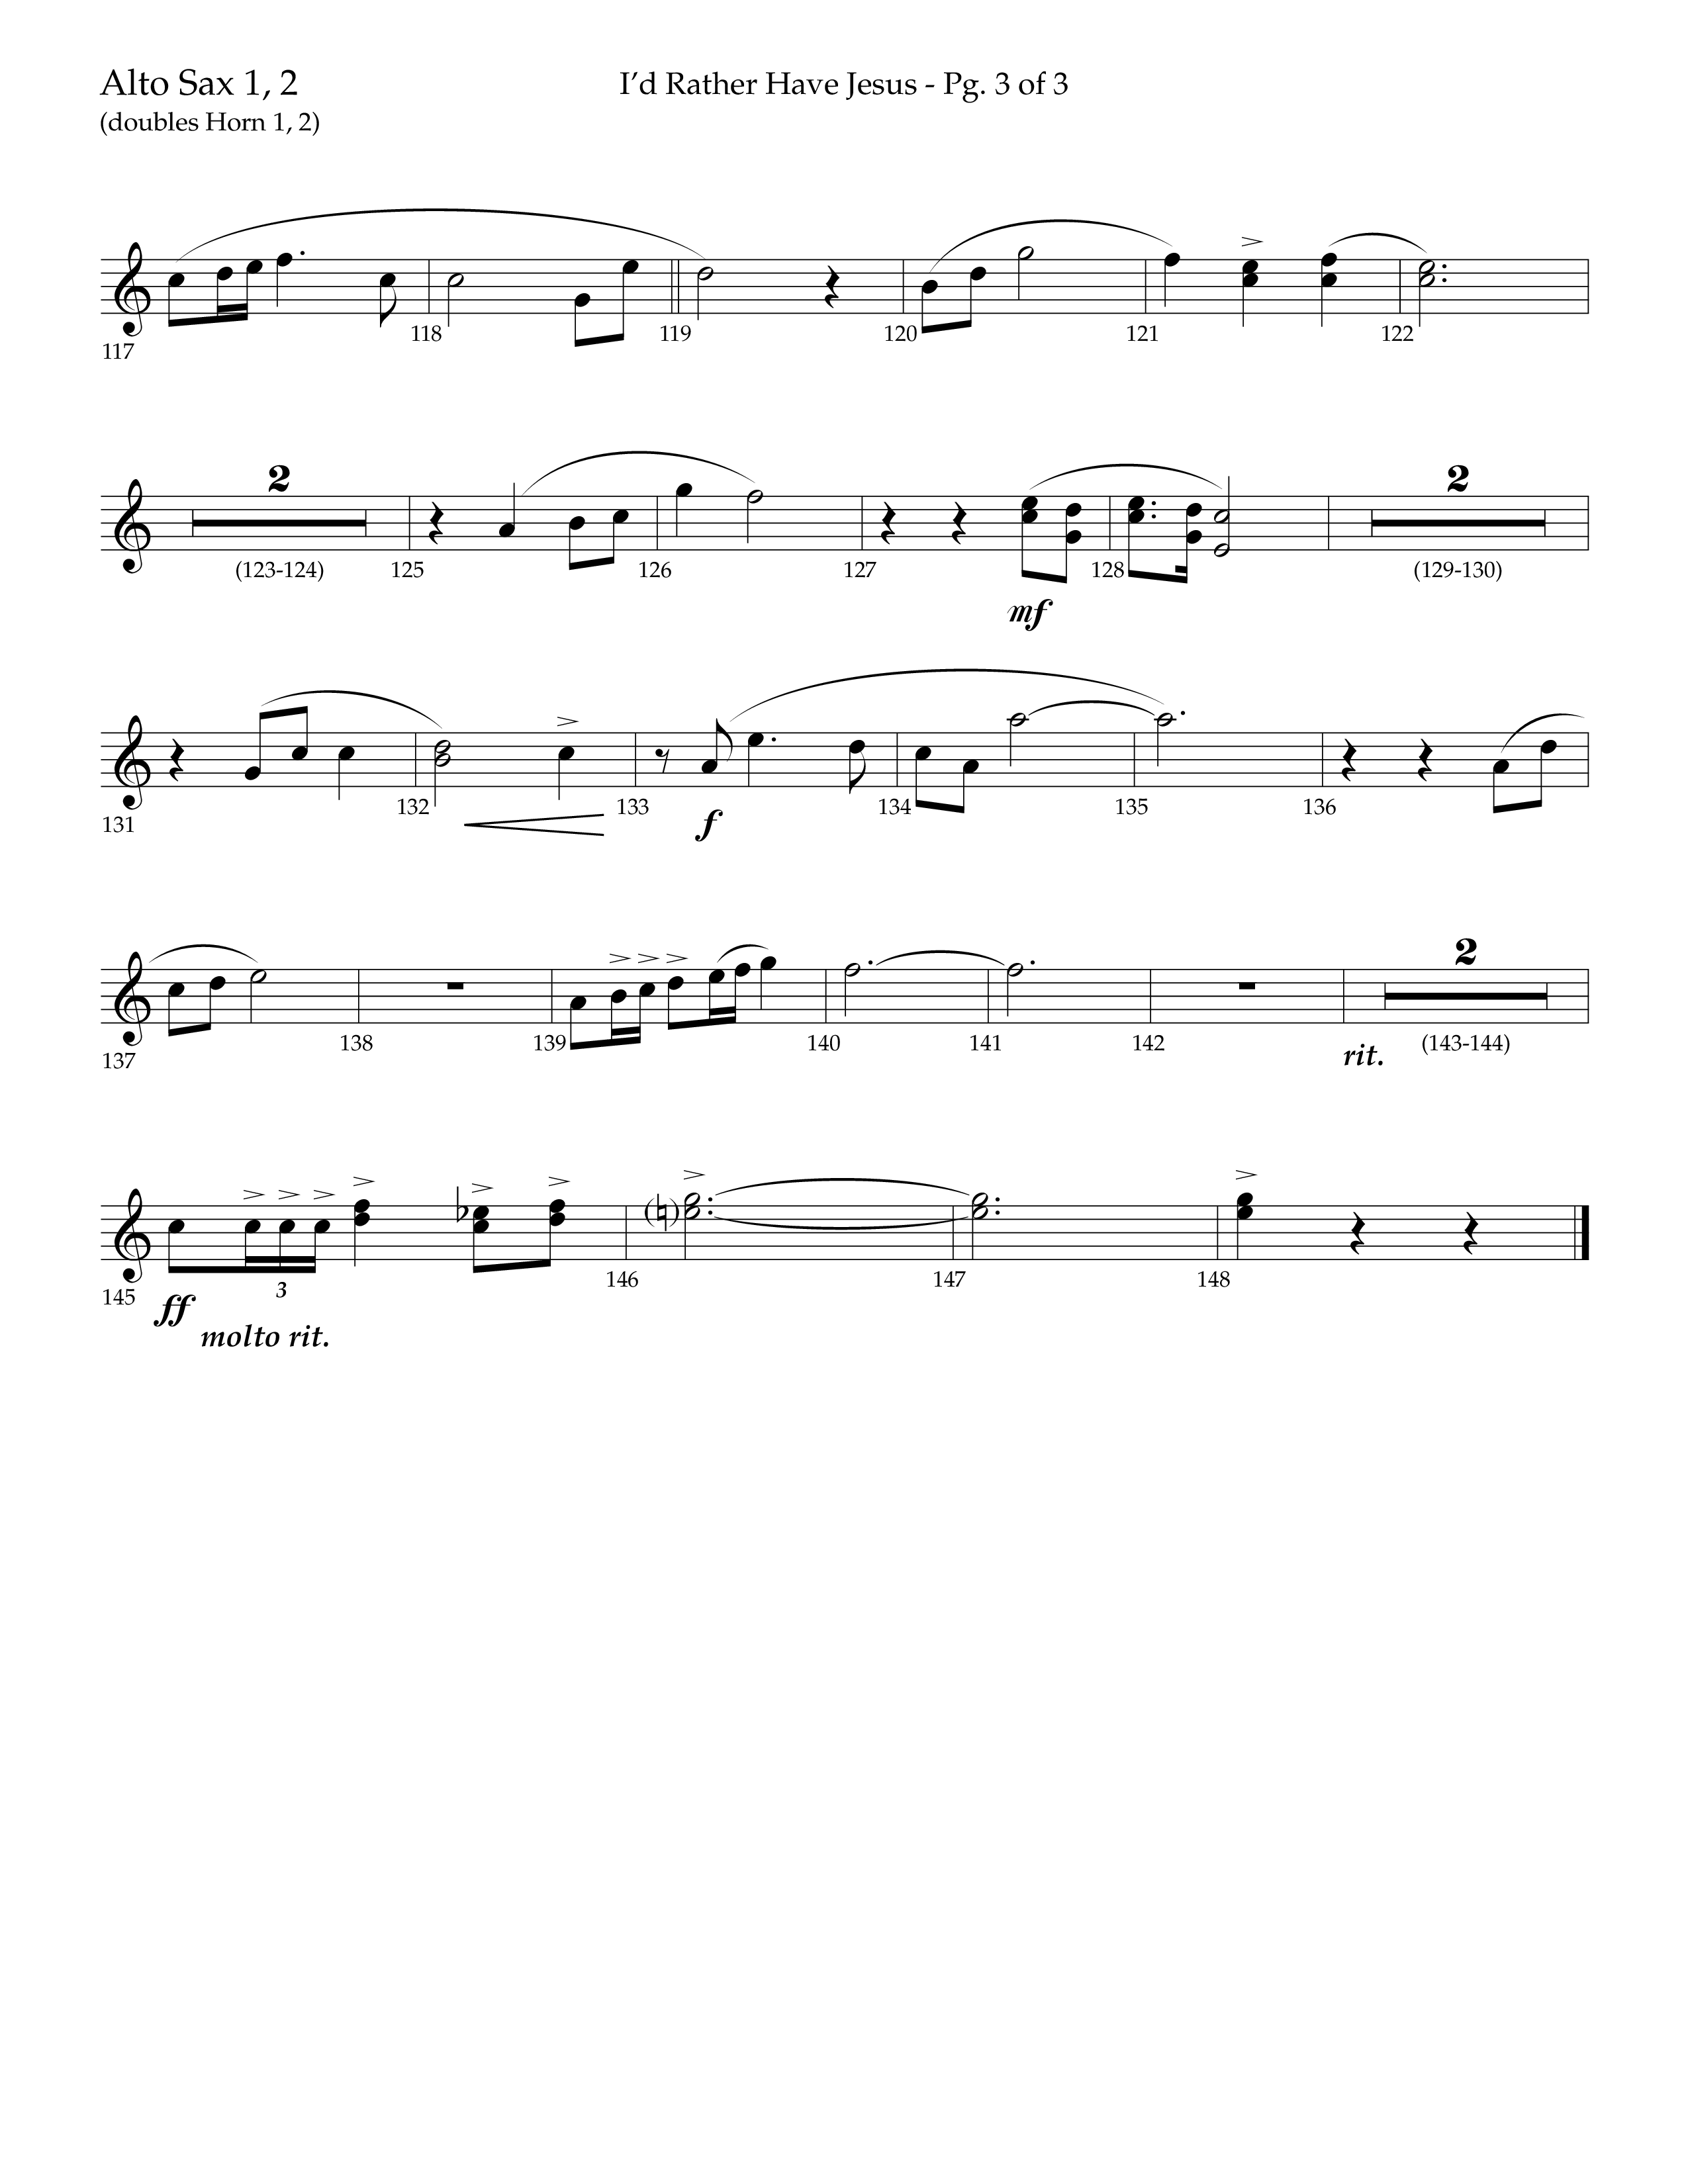 I'd Rather Have Jesus (Choral Anthem SATB) Alto Sax 1/2 (Lifeway Choral / Arr. Richard Kingsmore)